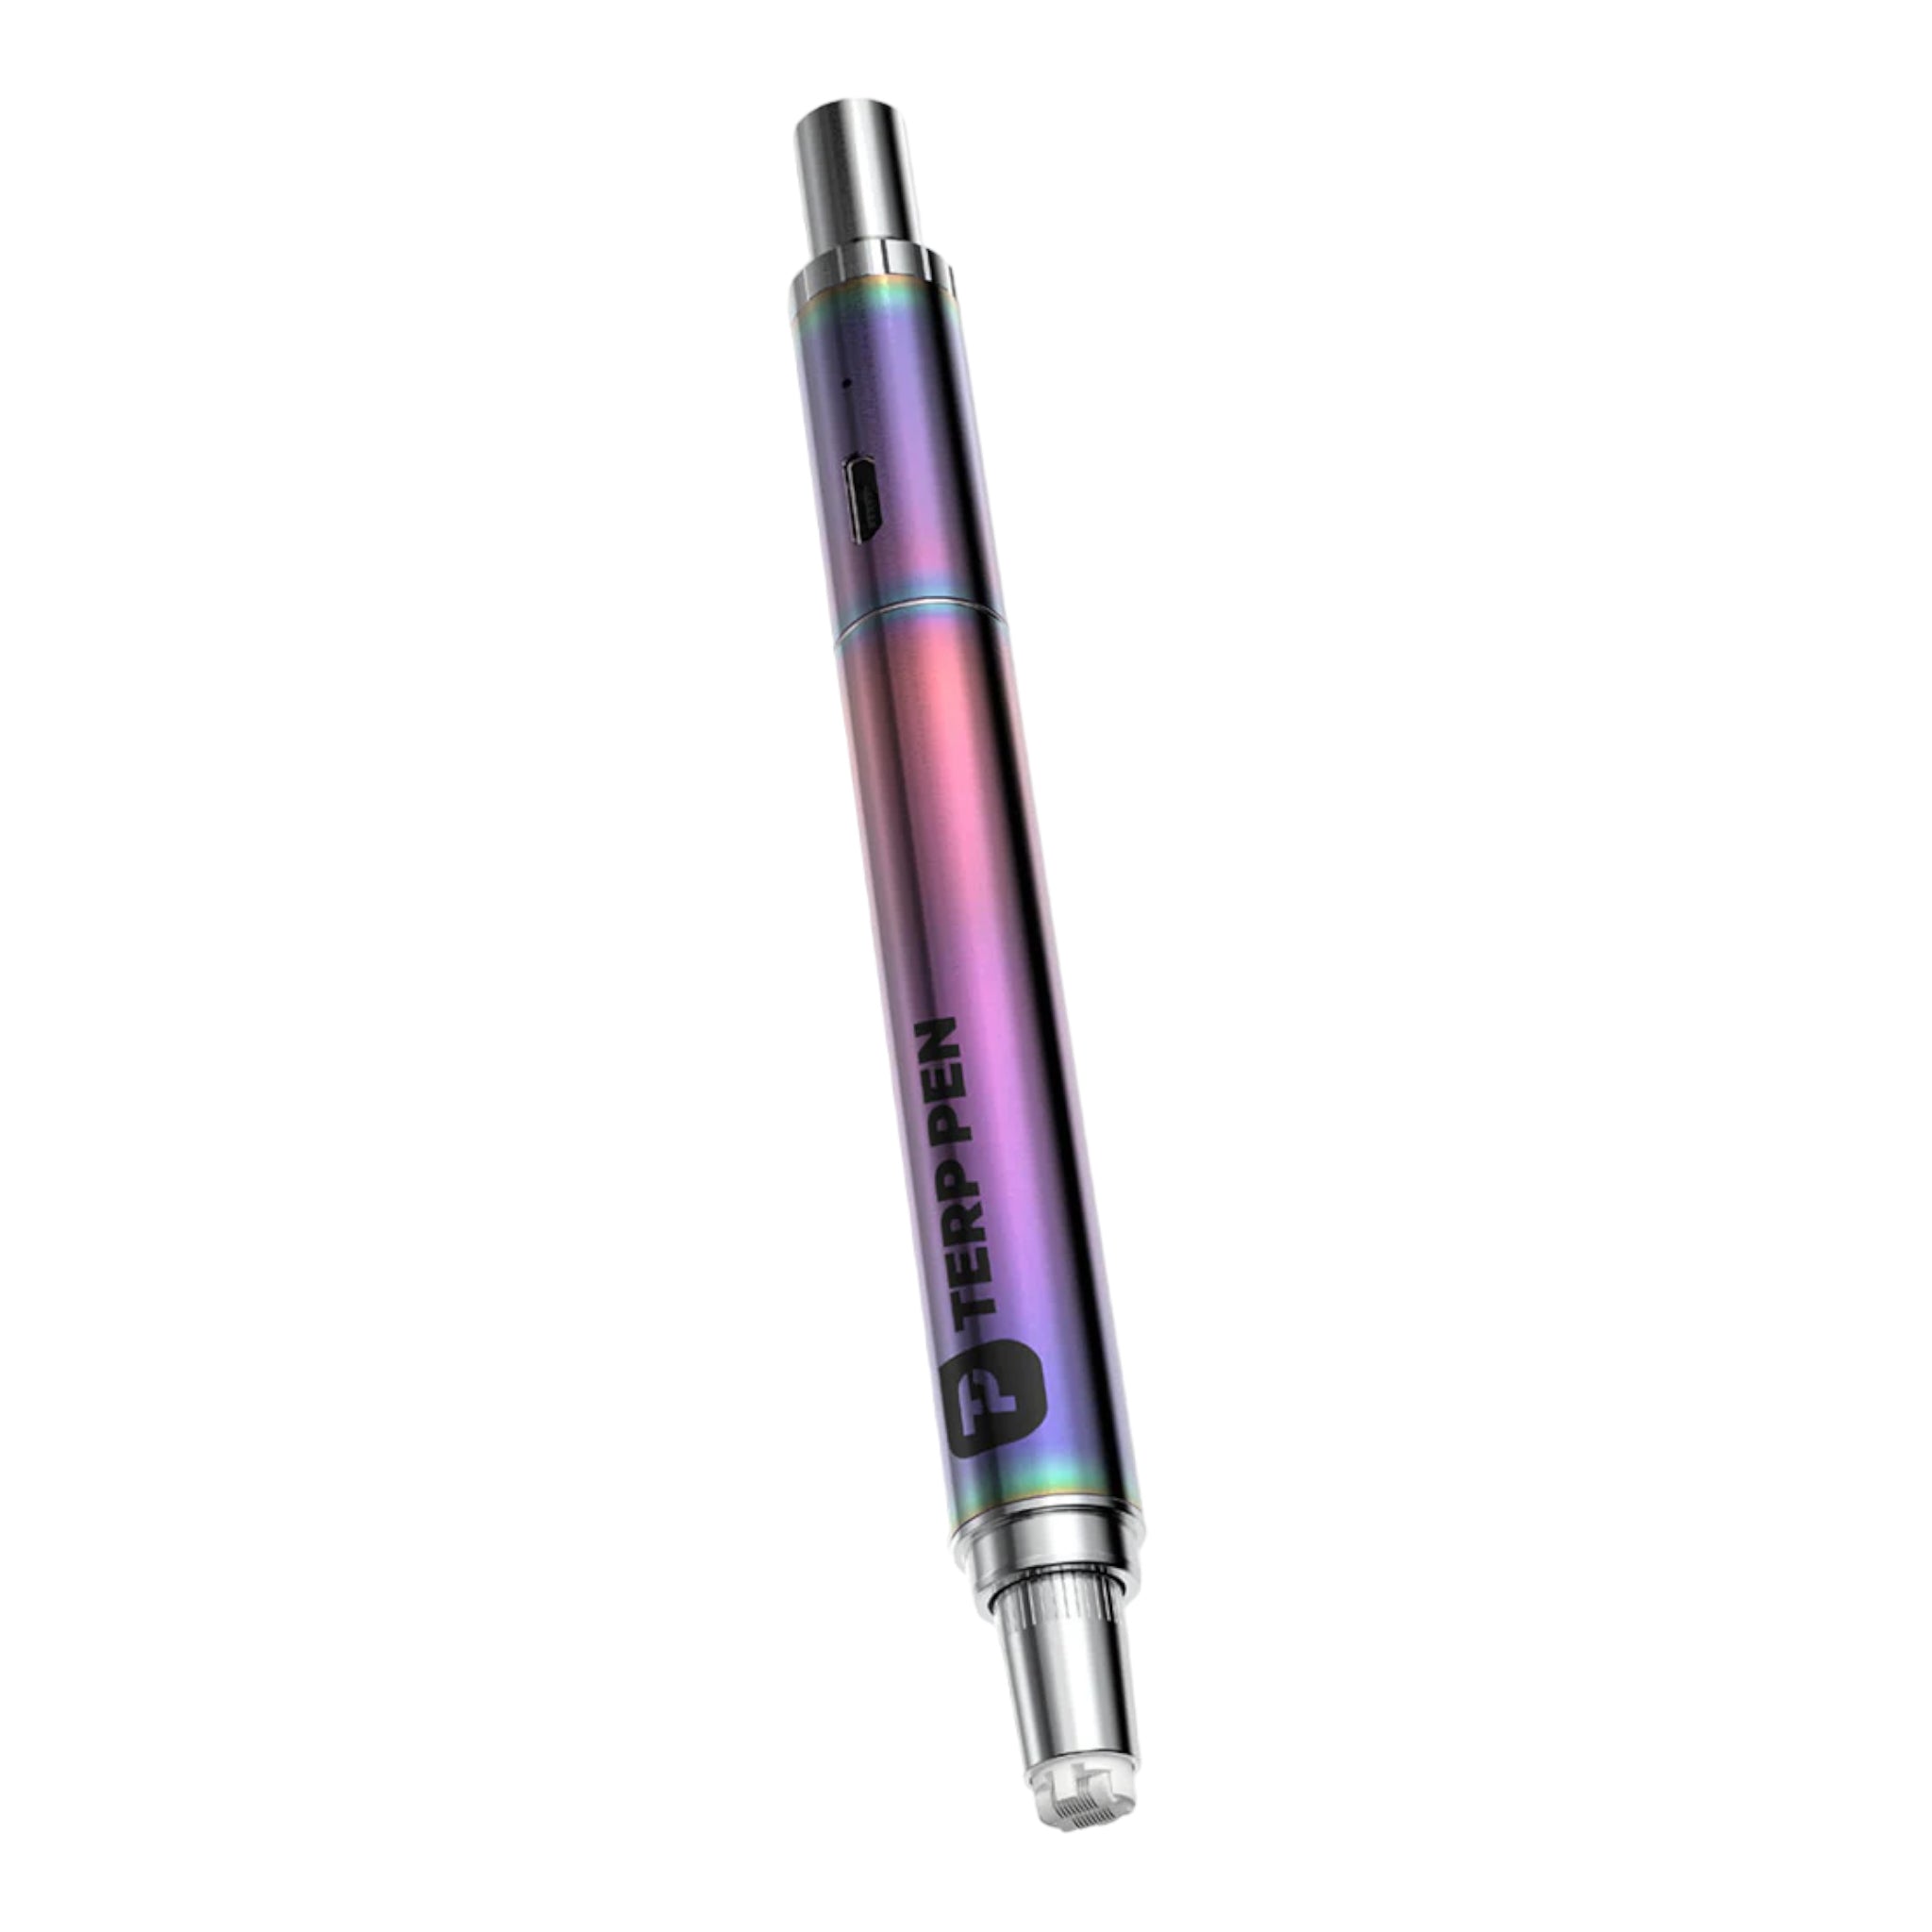 Boundless - Portable Terp Pen Wax Oil Vaporizer Rainbow